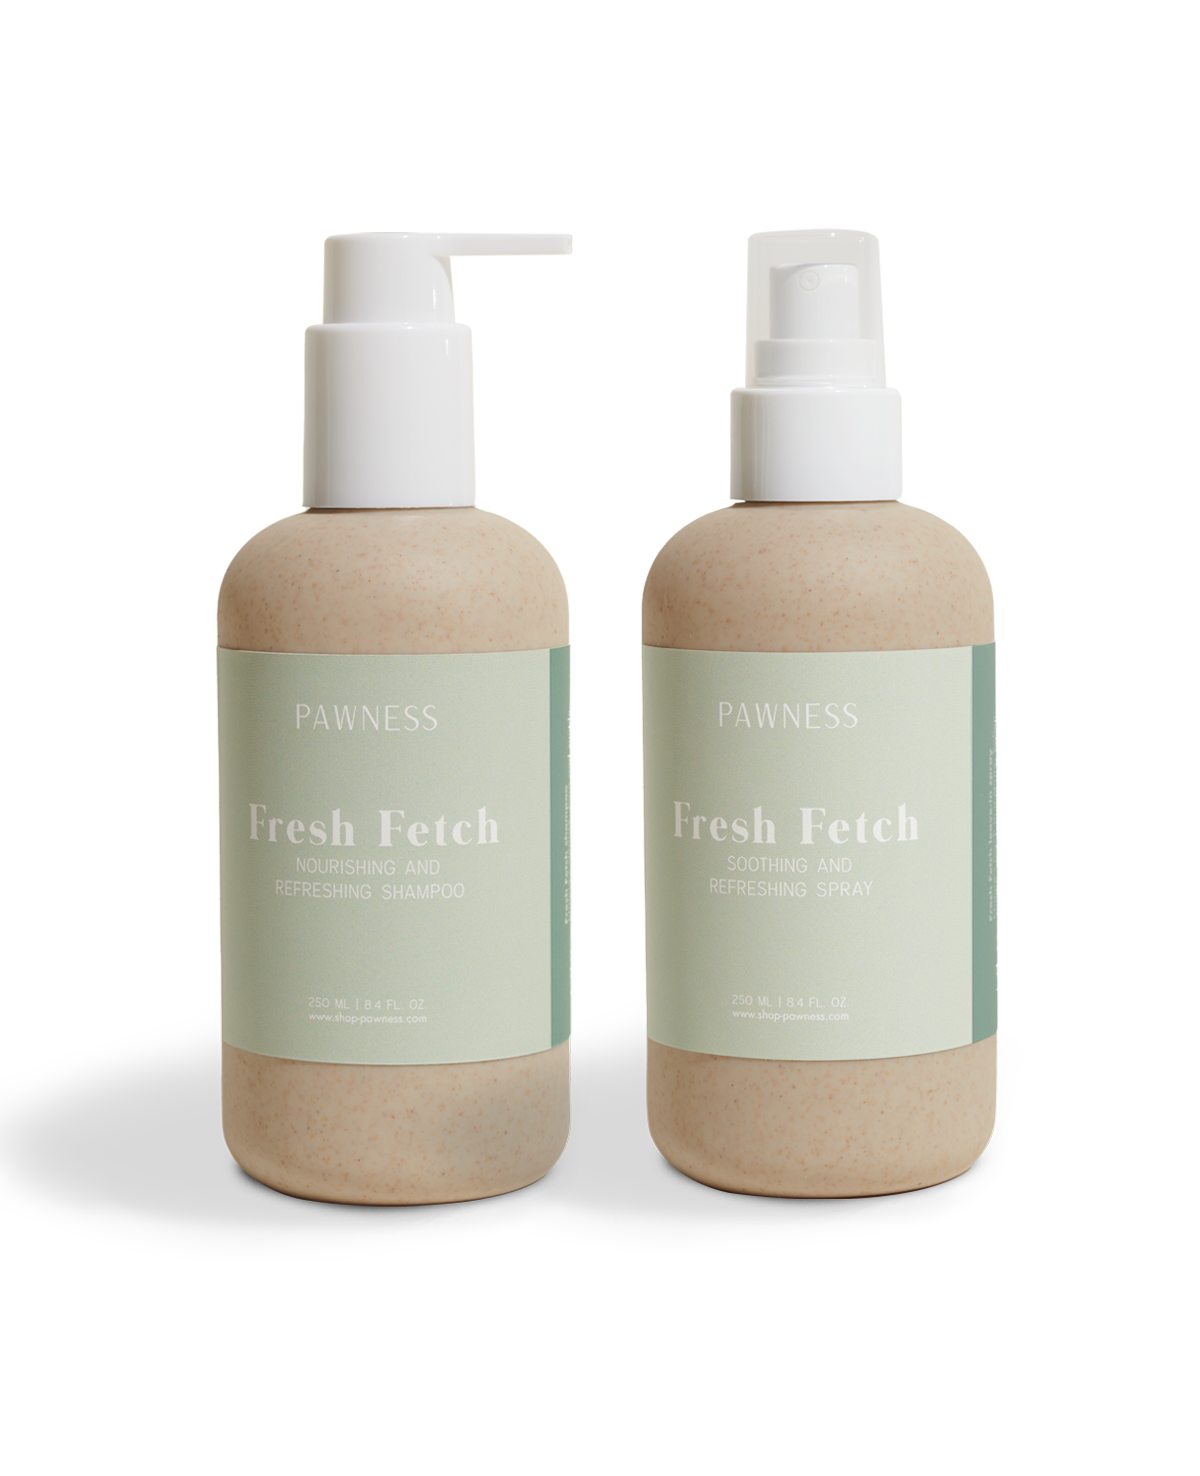 Twee flesjes frisse Fetch hand wash, perfect om je handen de hele dag schoon en fris te houden.